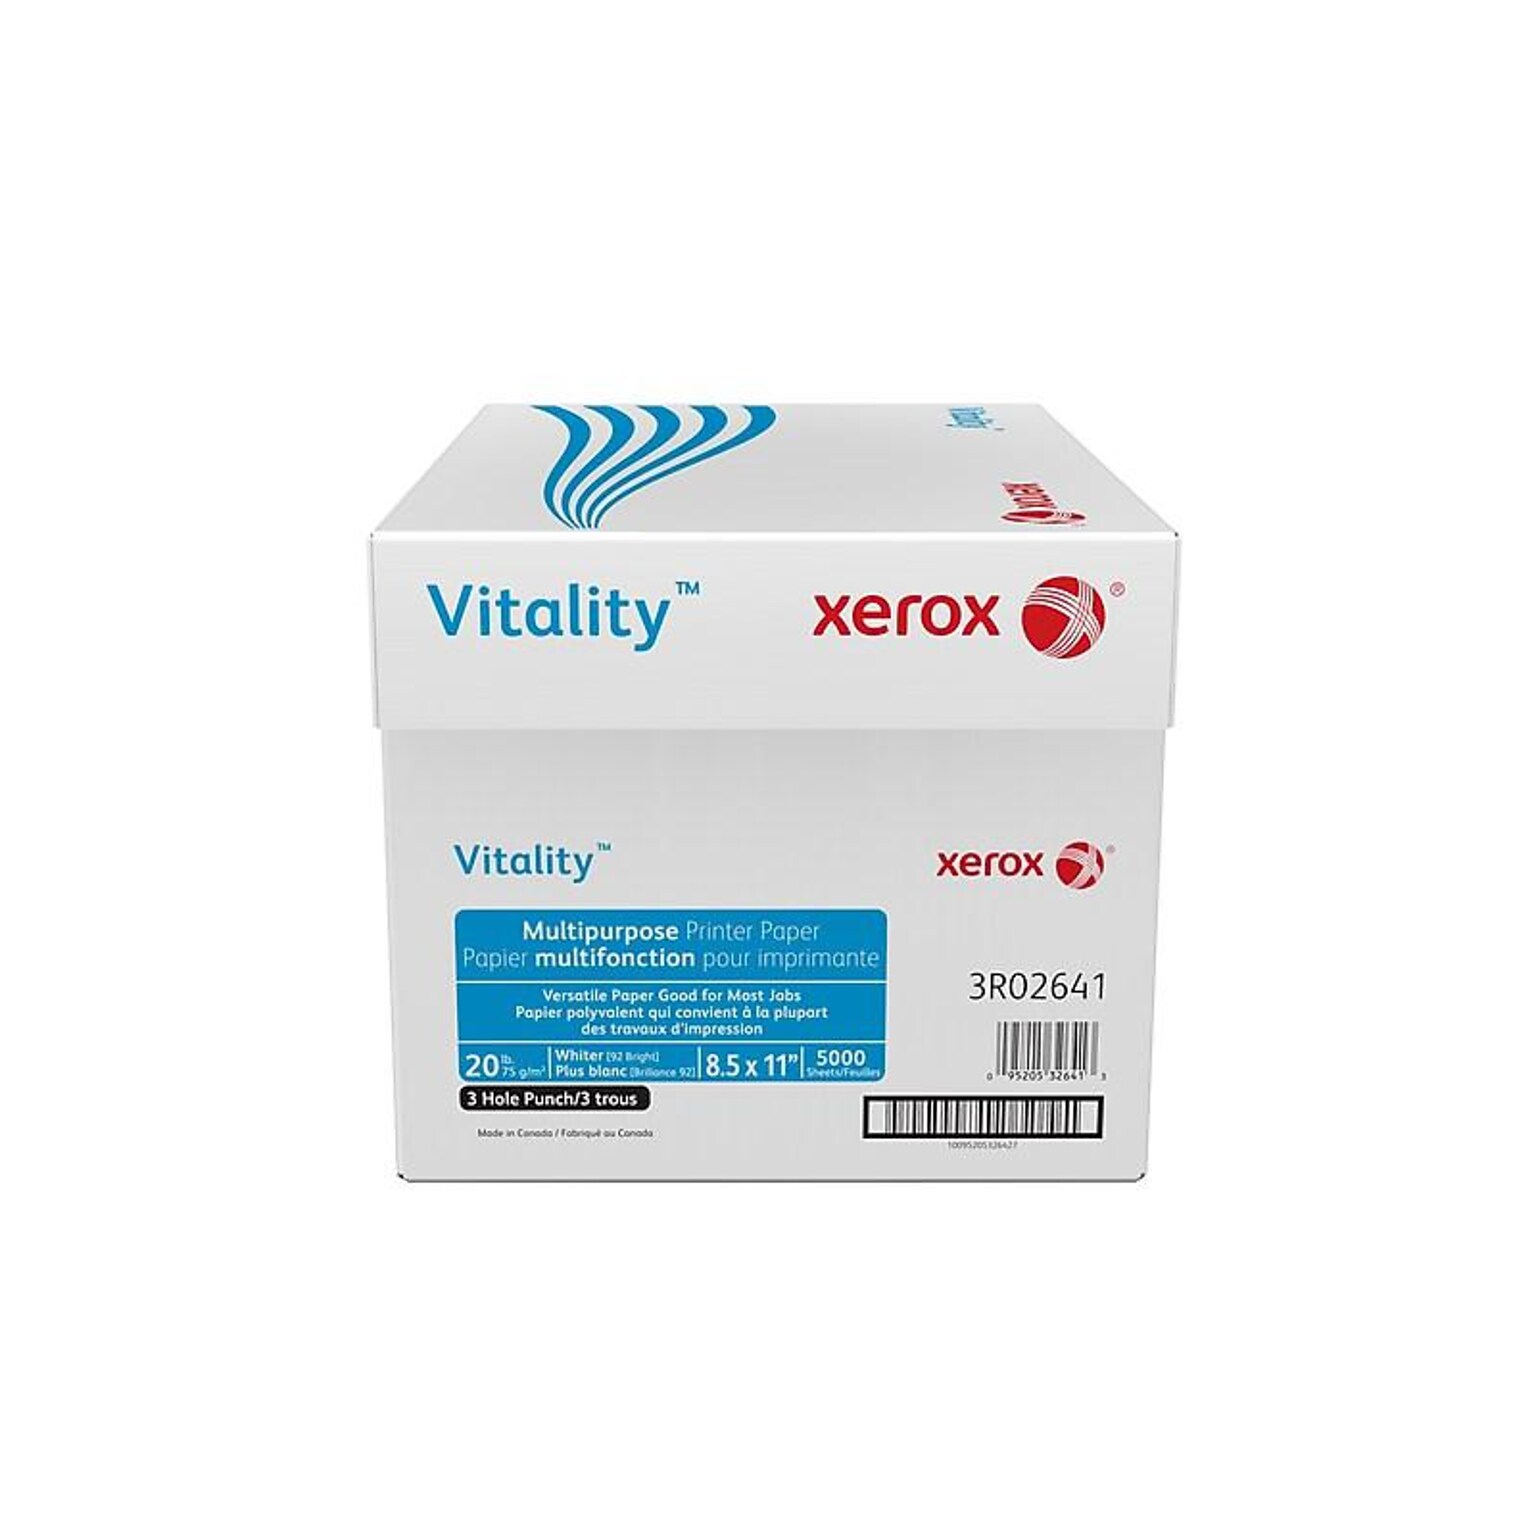 Xerox® Vitality® 8.5 x 11 3-Hole Punch Multipurpose Printer Paper, 20 lbs., 92 Brightness, 10 Reams/Carton (3R2641)